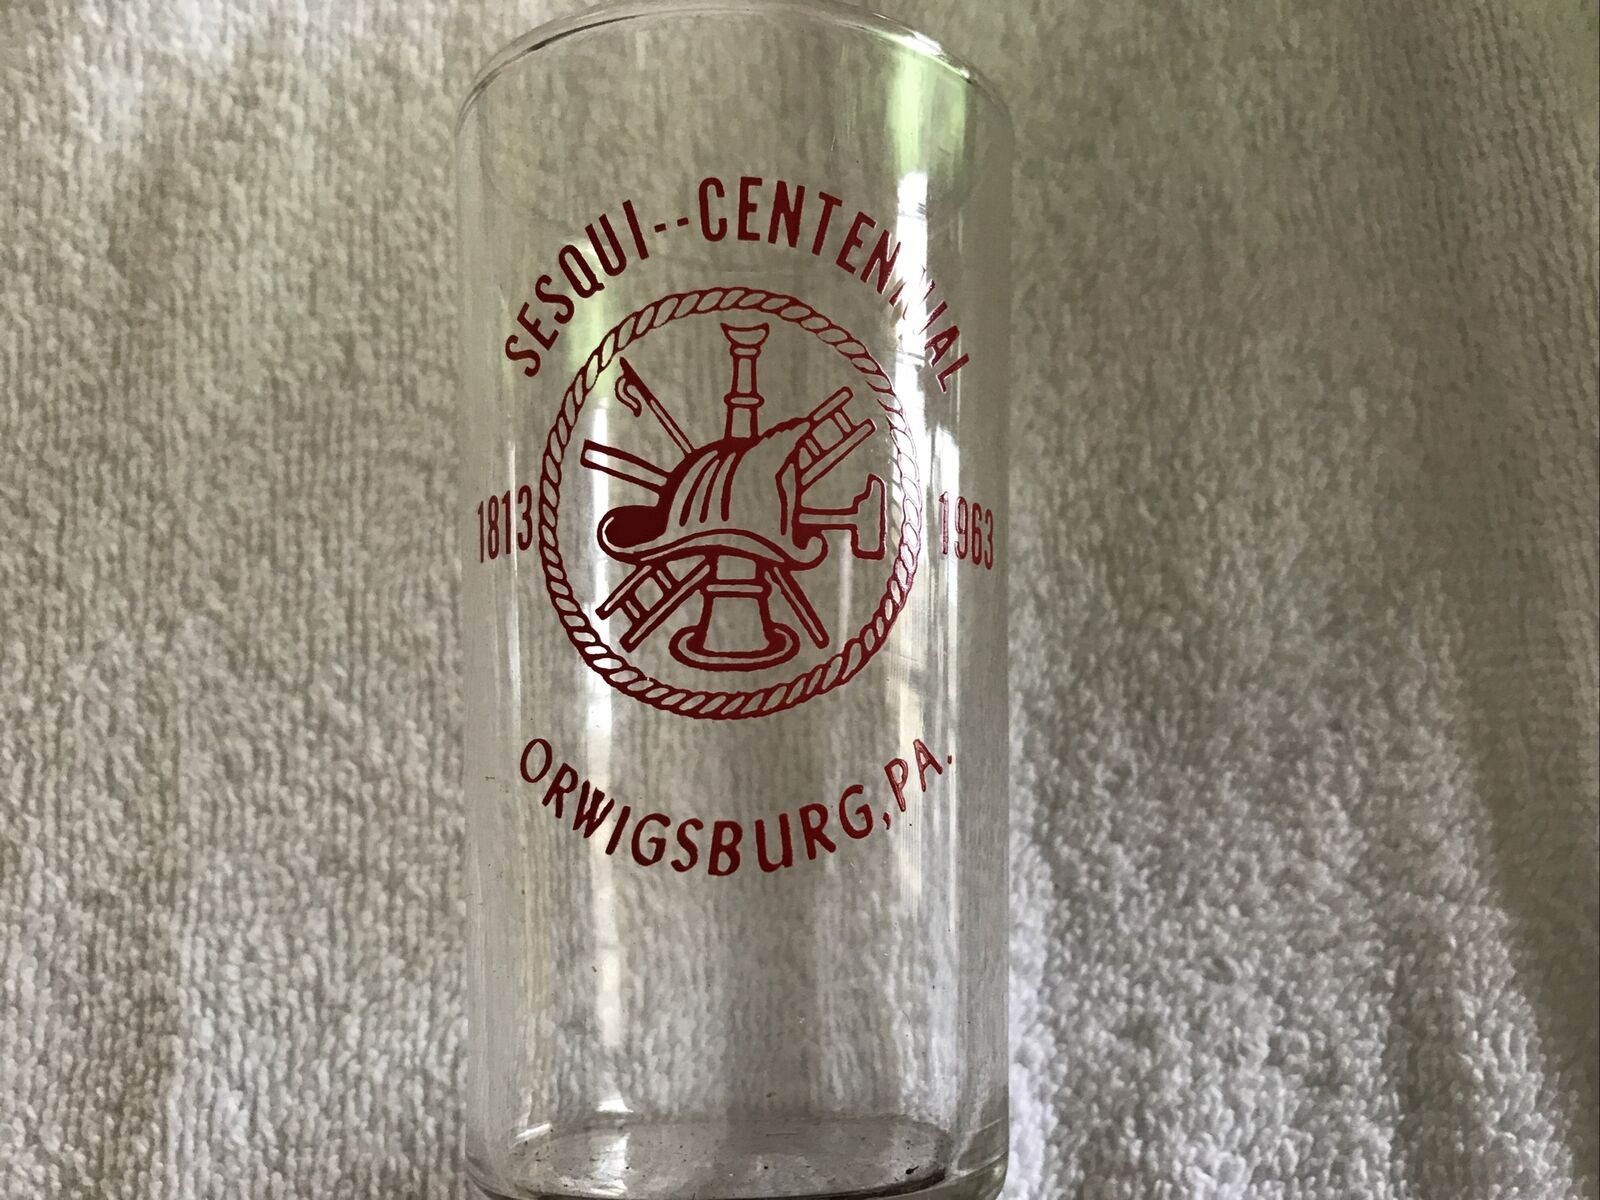 1963 VINTAGE SESQUI- CENTENNIAL SOUVENIR GLASS, ORWIGSBURG, PA.